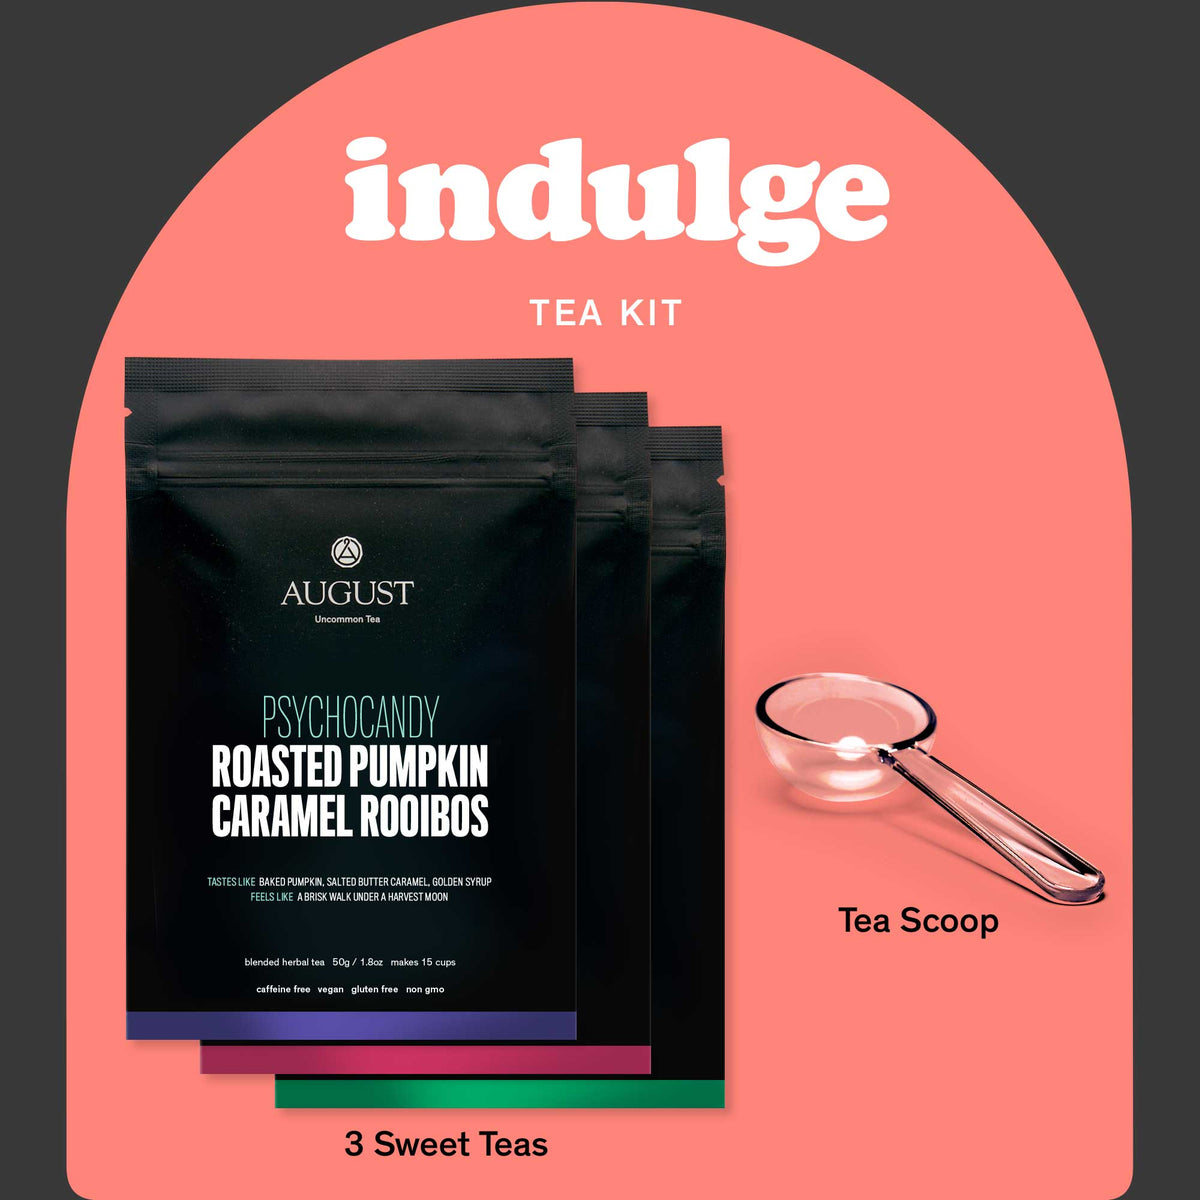 Indulge Tea Kit: 3 Sweet Teas to Satisfy Sugar Cravings